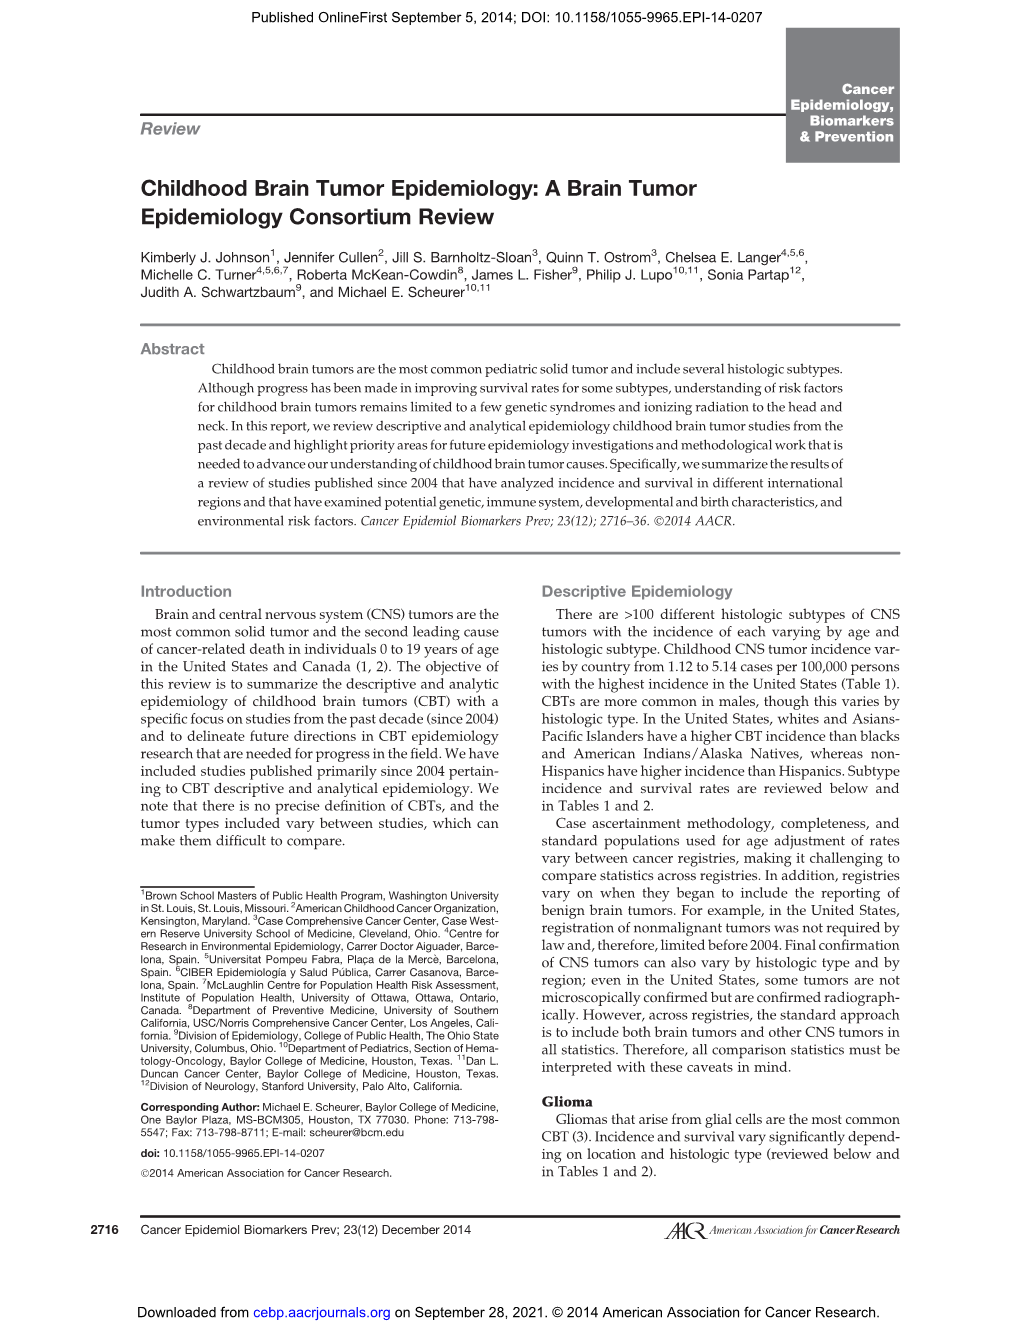 A Brain Tumor Epidemiology Consortium Review